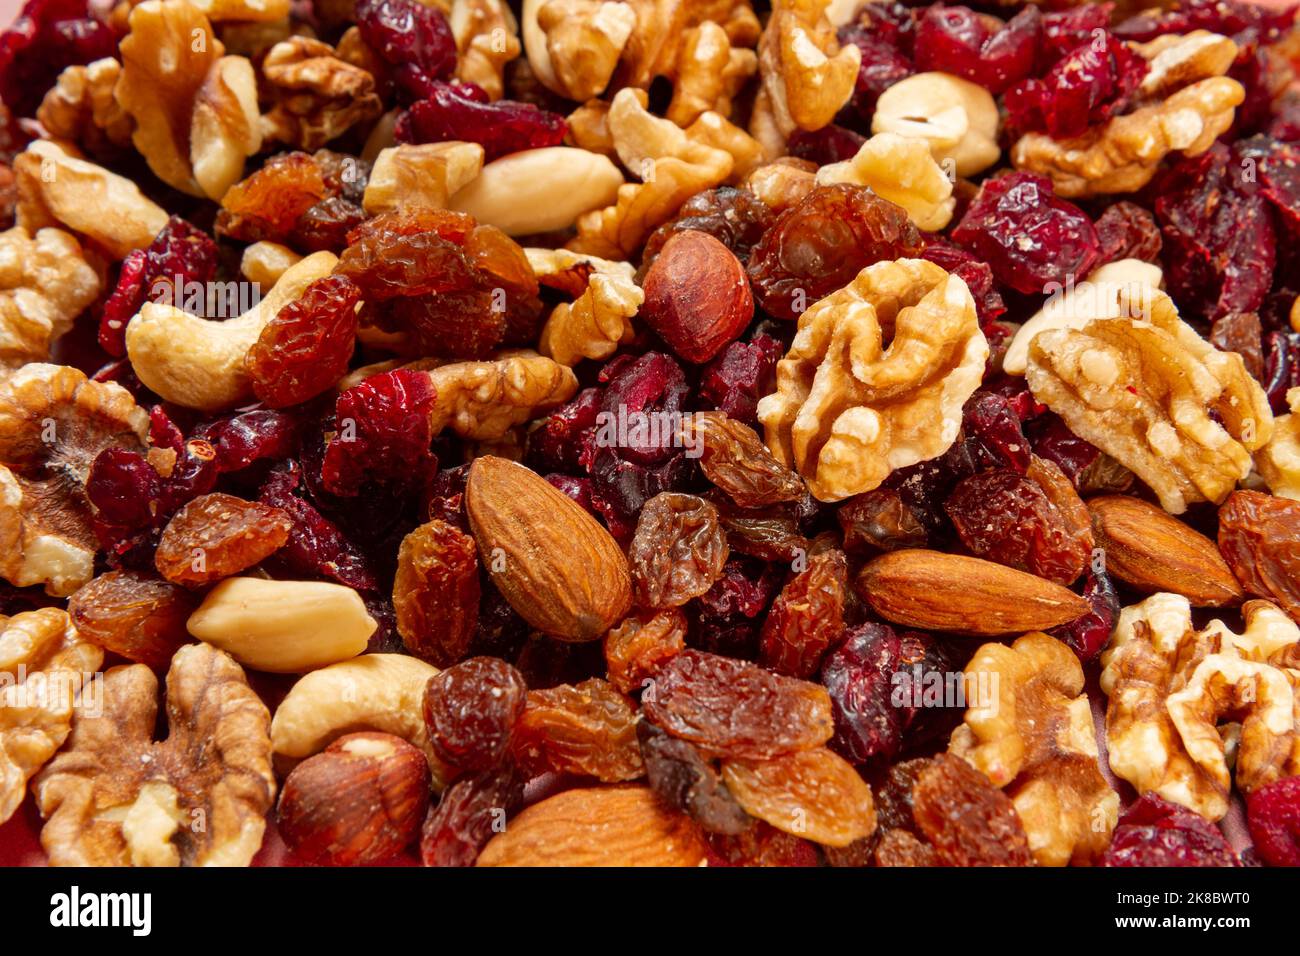 fruit and nut mix Stock Photo